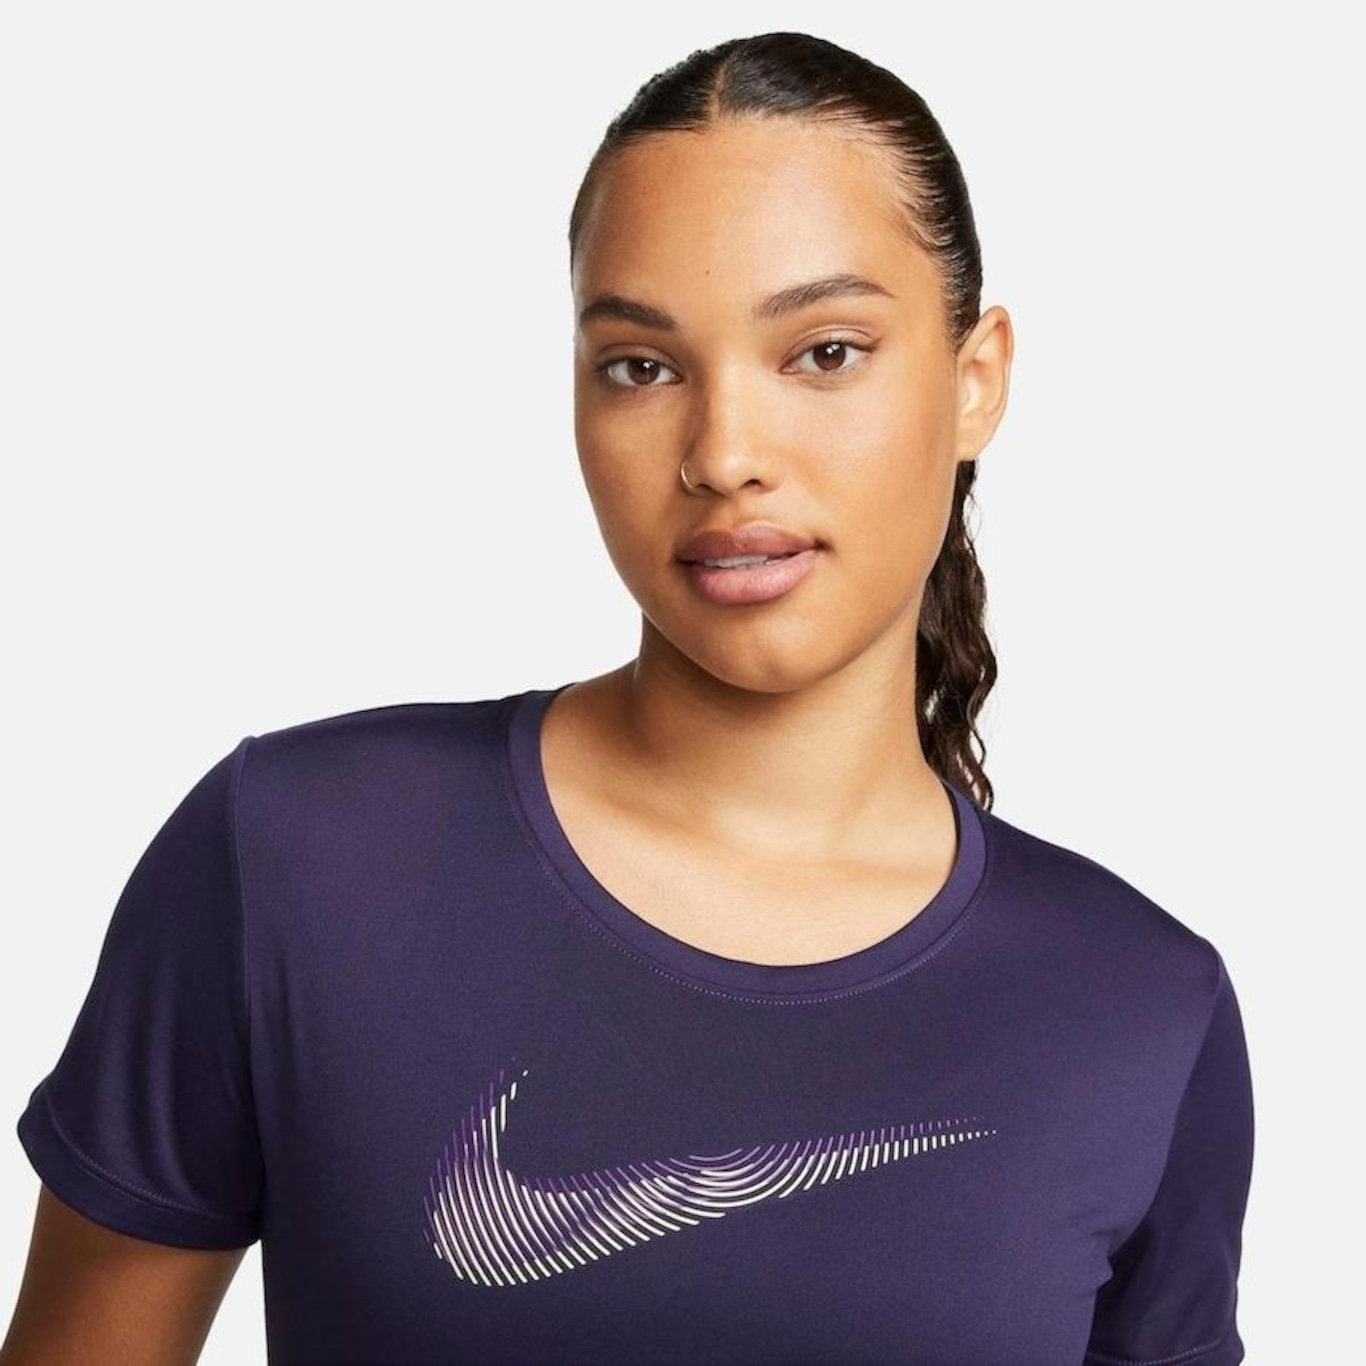 Camiseta Nike One Dri-fit Swoosh Feminina